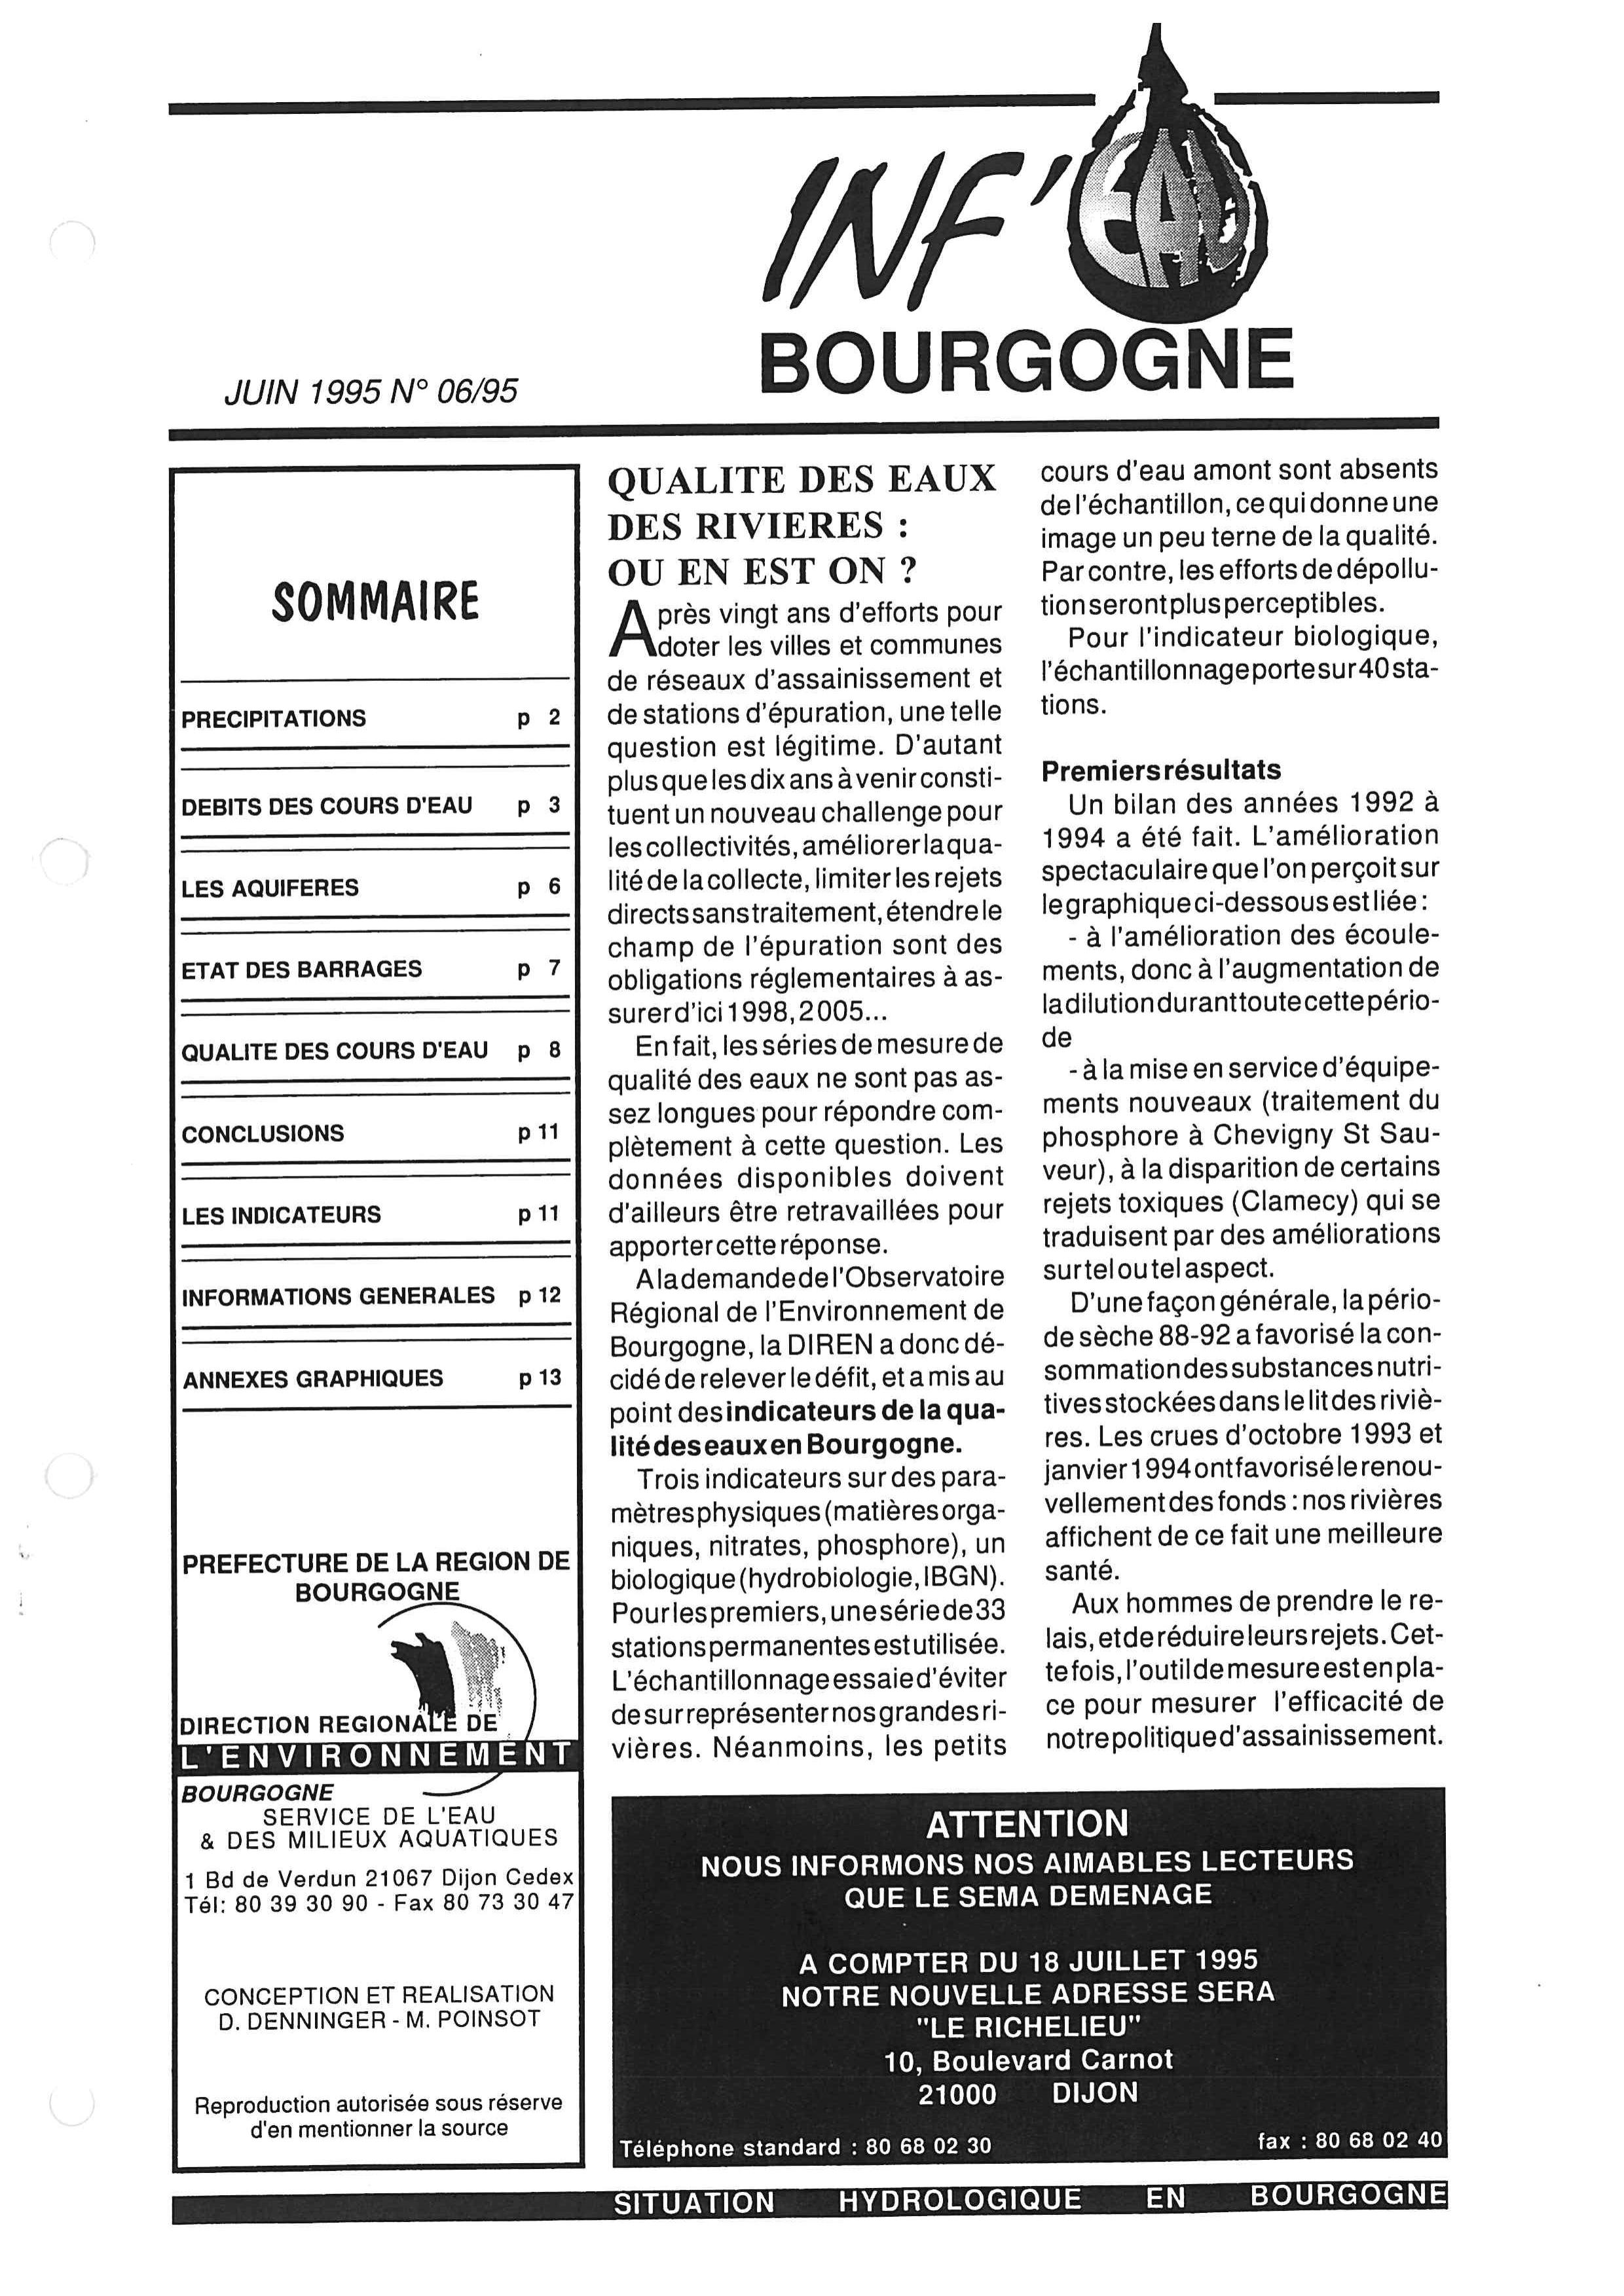 Bulletin hydrologique du mois de mai 1995